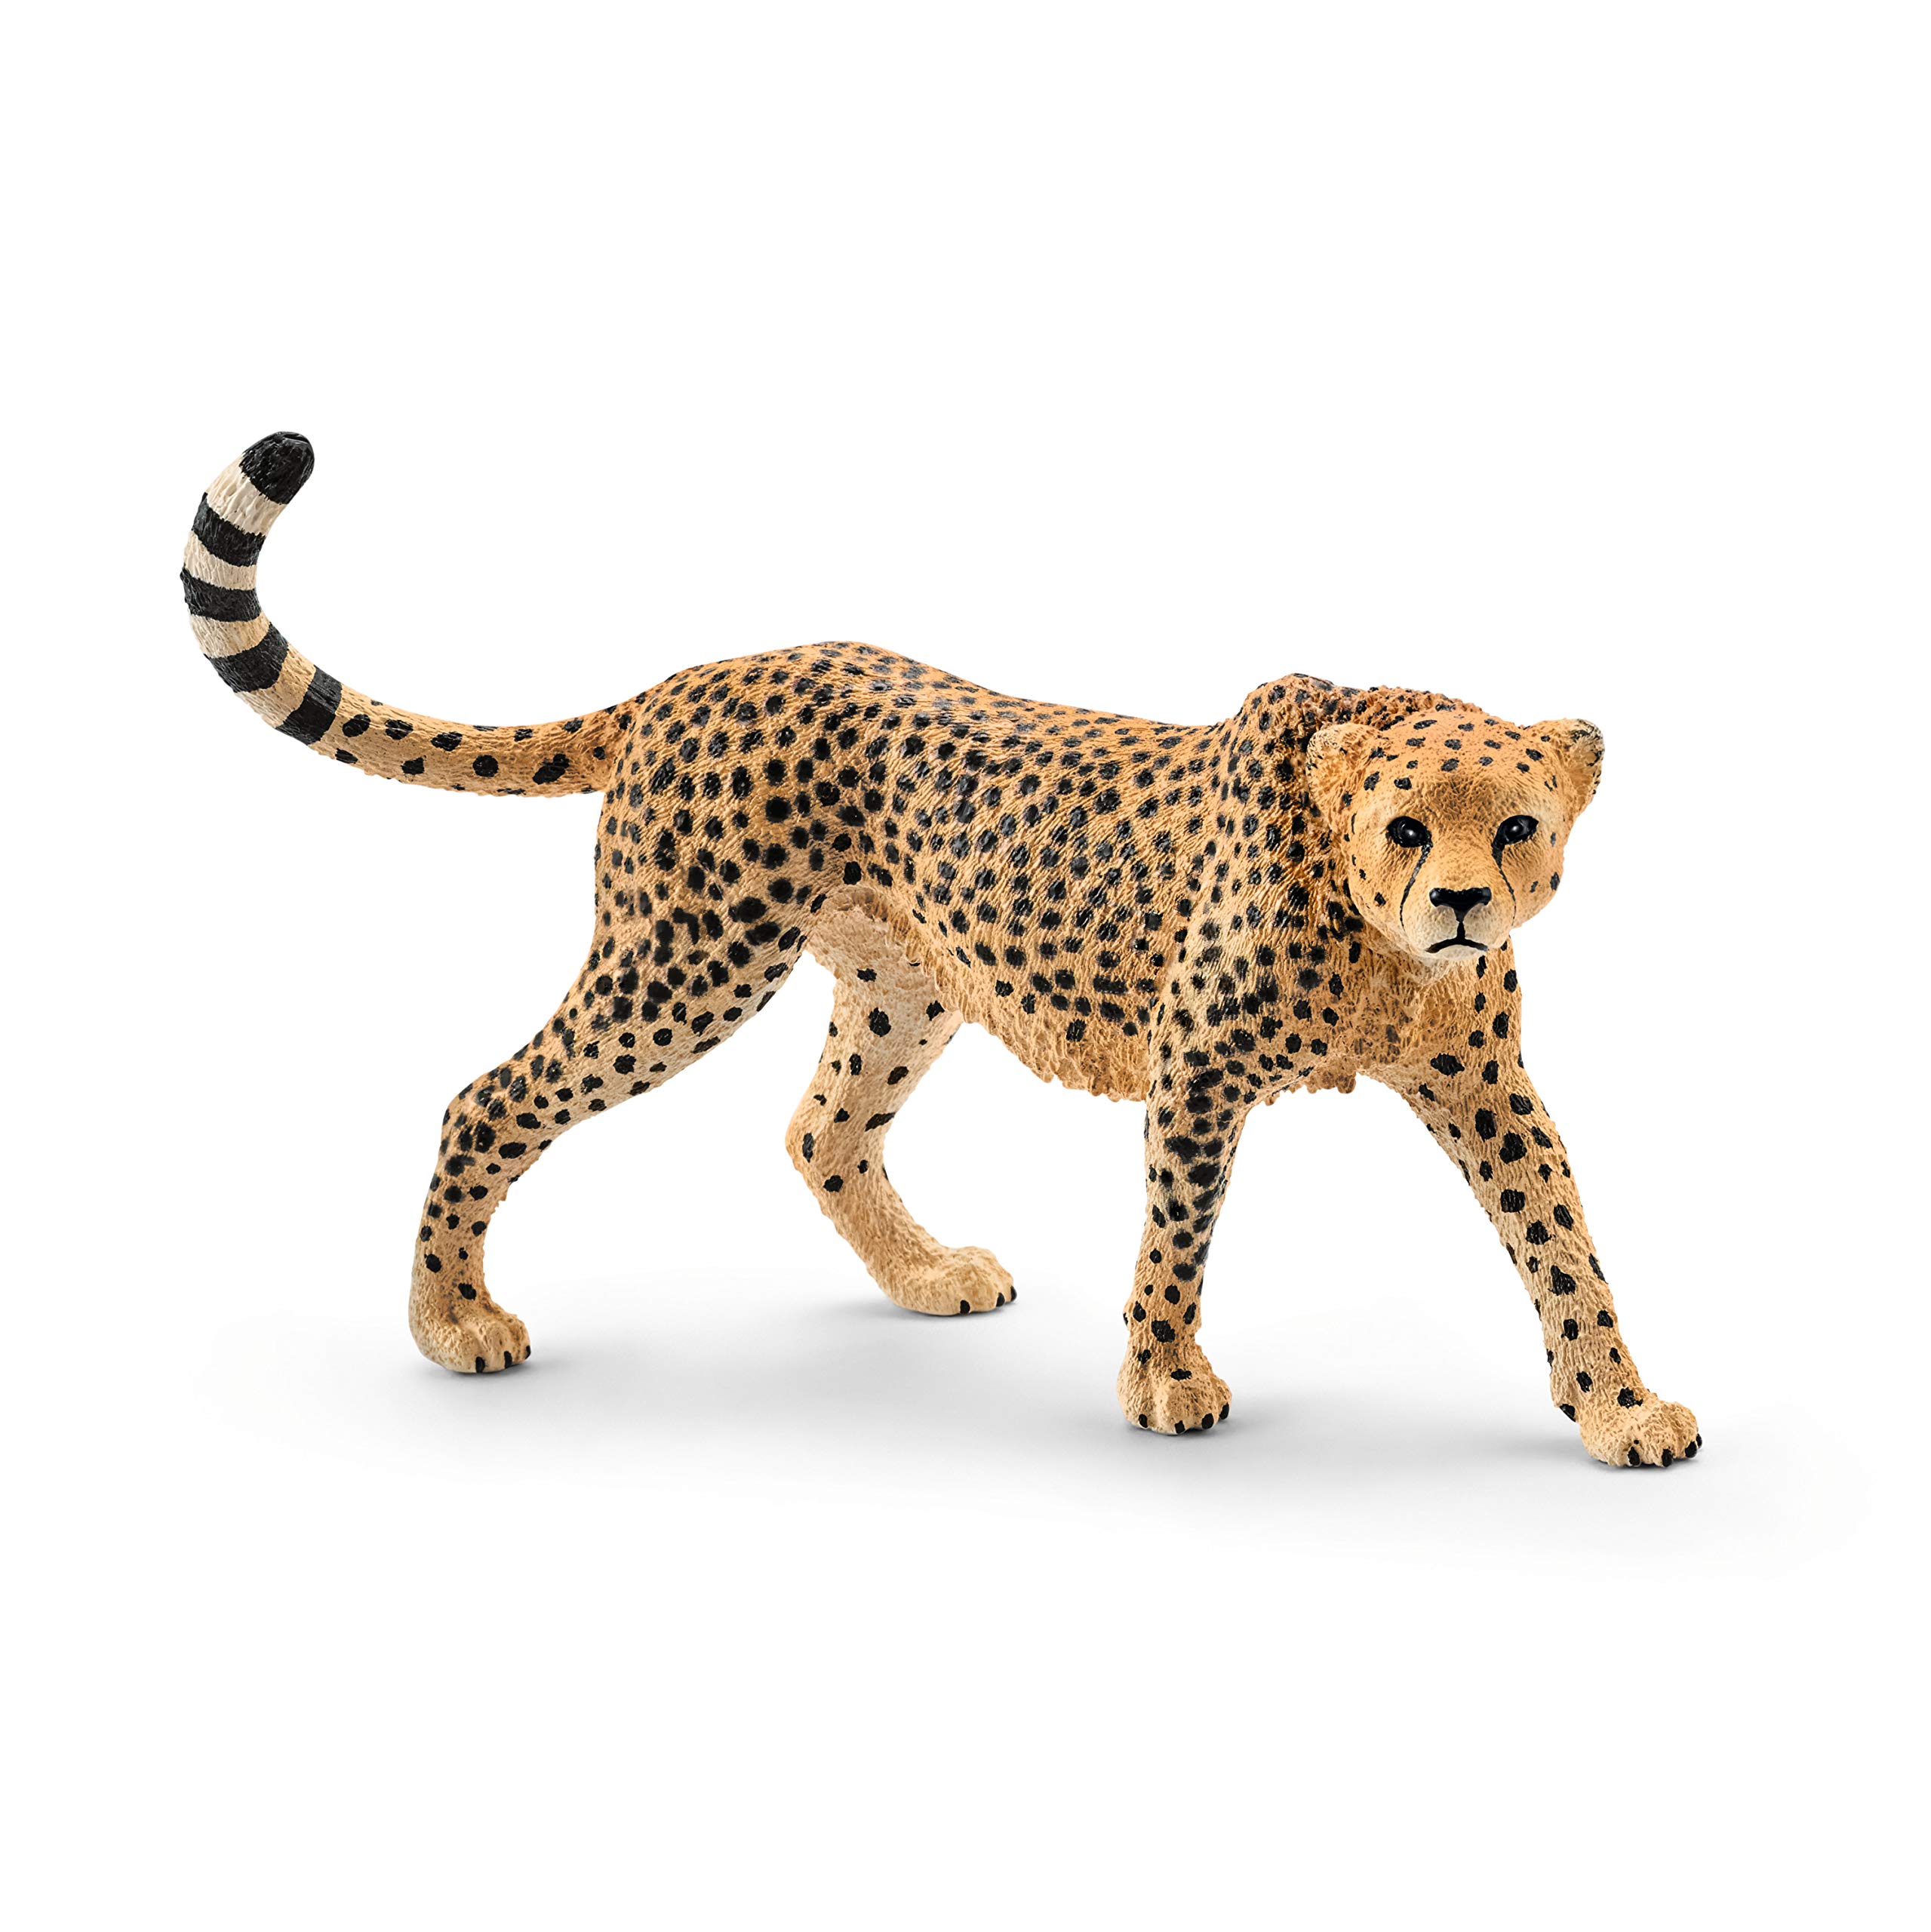 Animale Schleich femmina di ghepardo